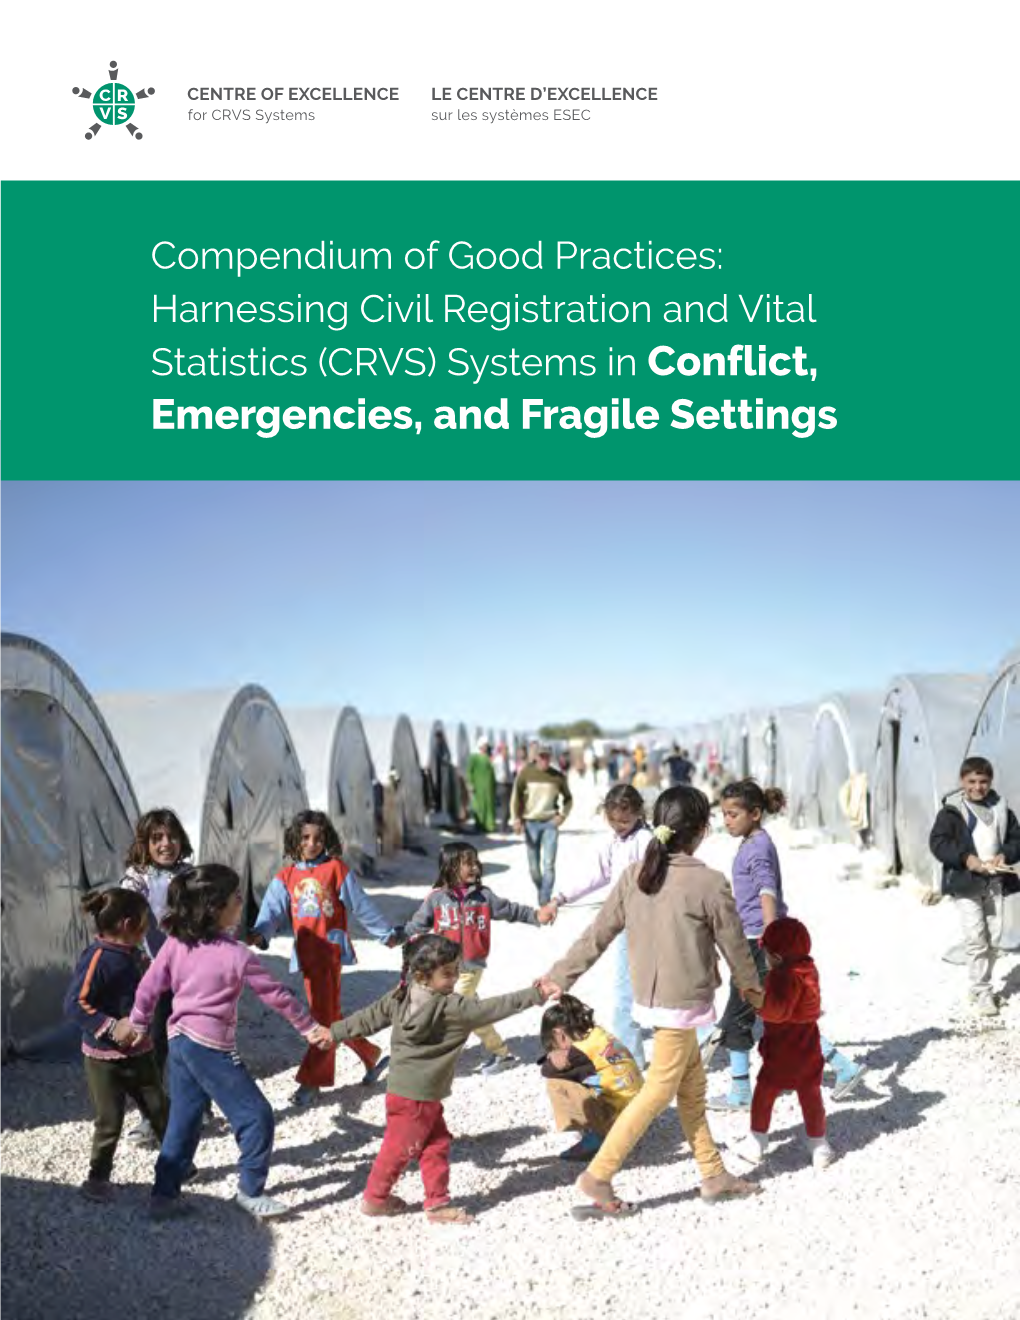 Compendium of Good Practices: Harnessing Civil Registration And